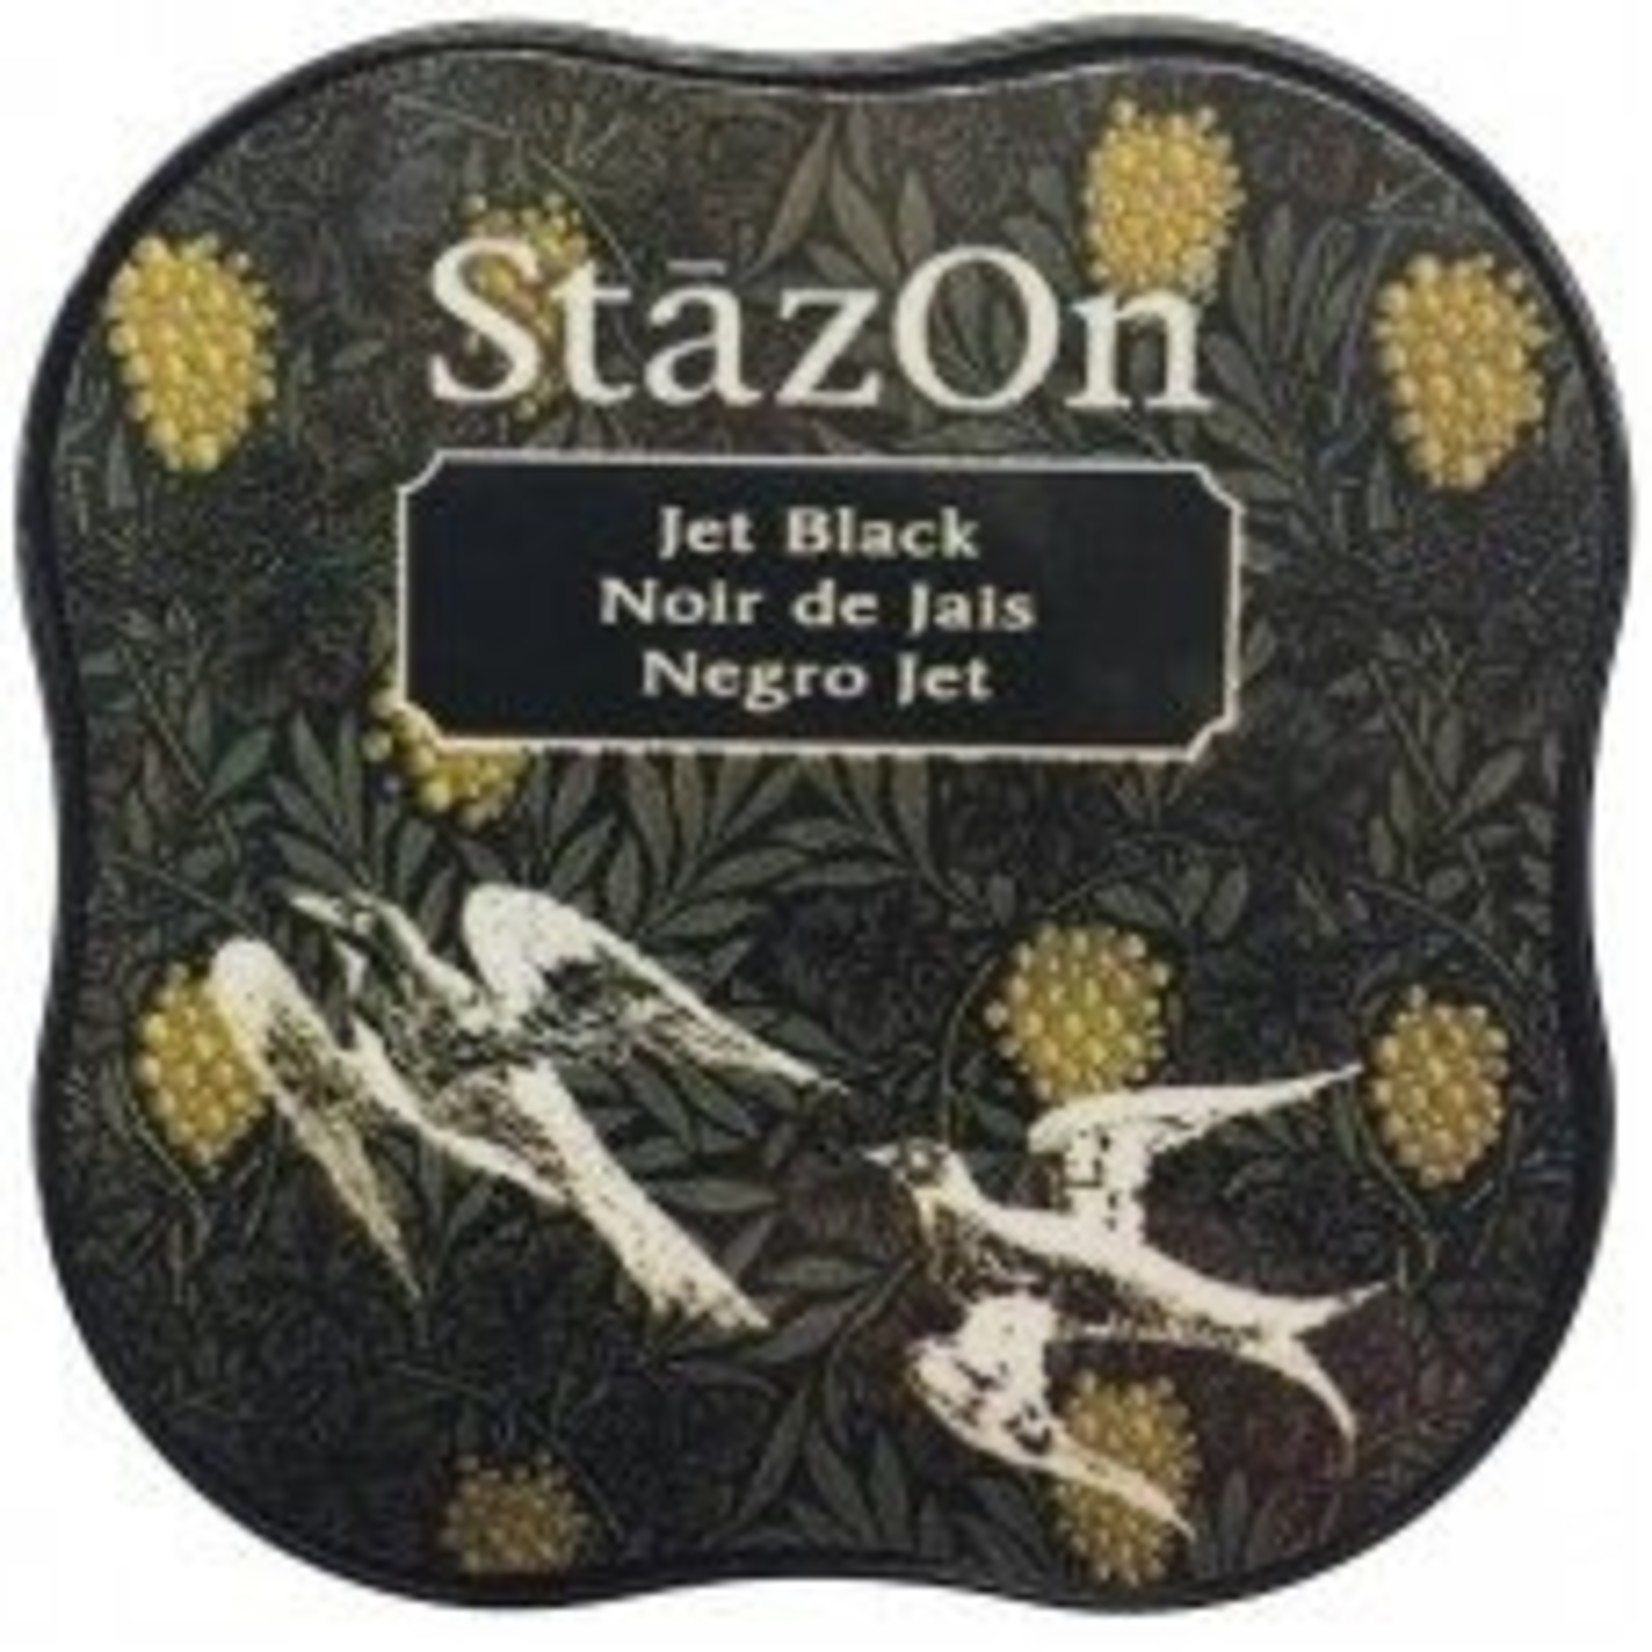 StazOn StazOn Jet Black